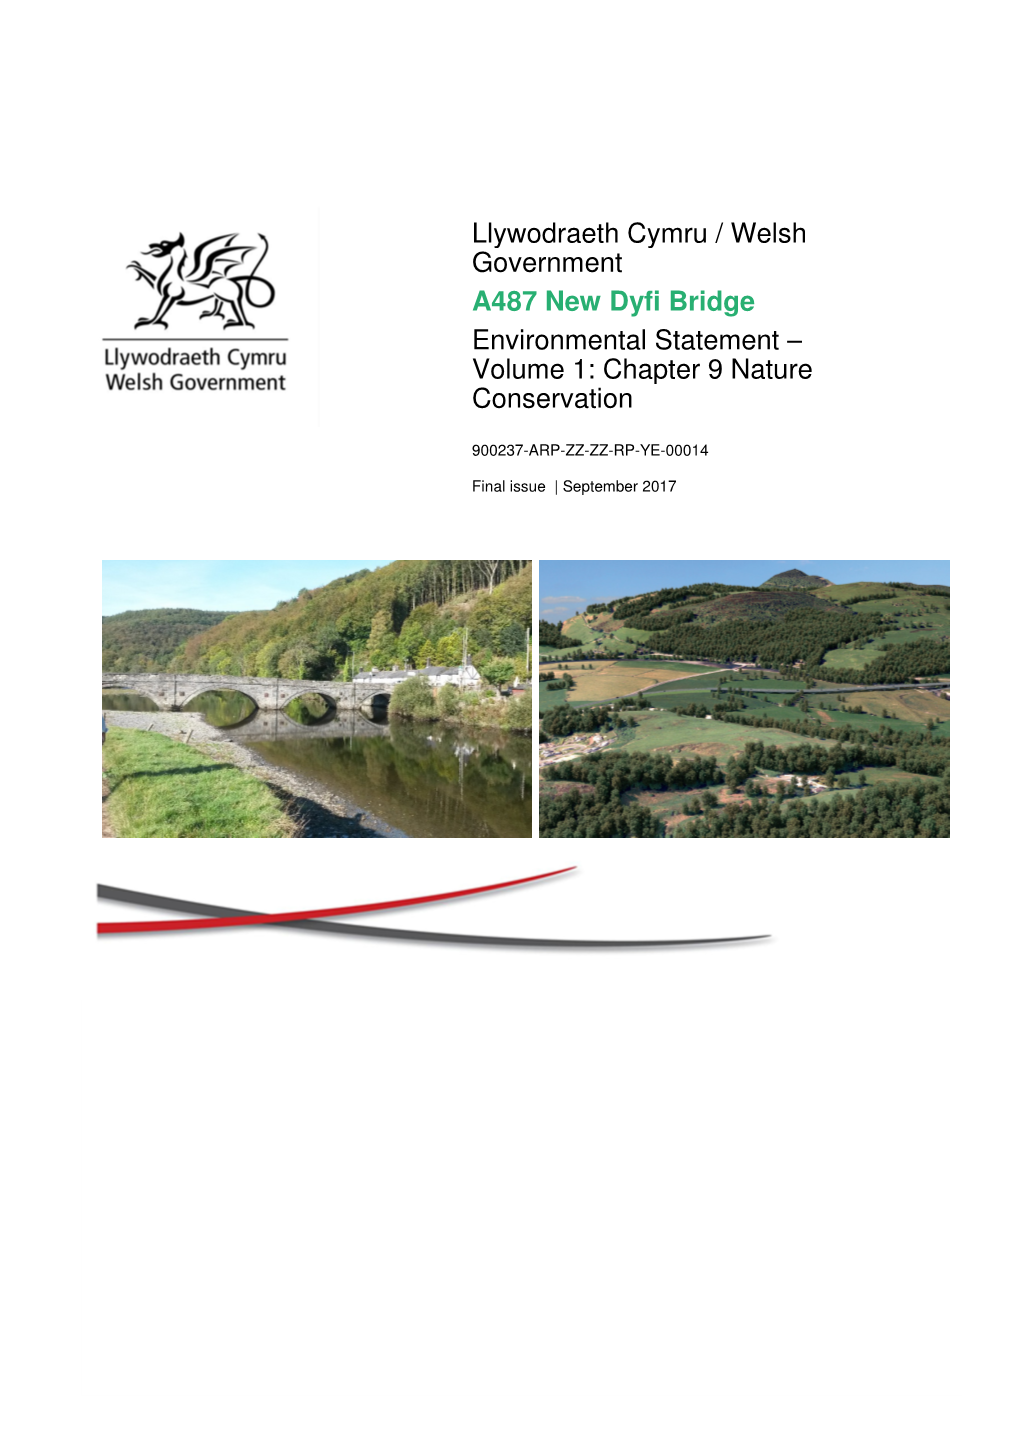 Llywodraeth Cymru / Welsh Government A487 New Dyfi Bridge Environmental Statement – Volume 1: Chapter 9 Nature Conservation